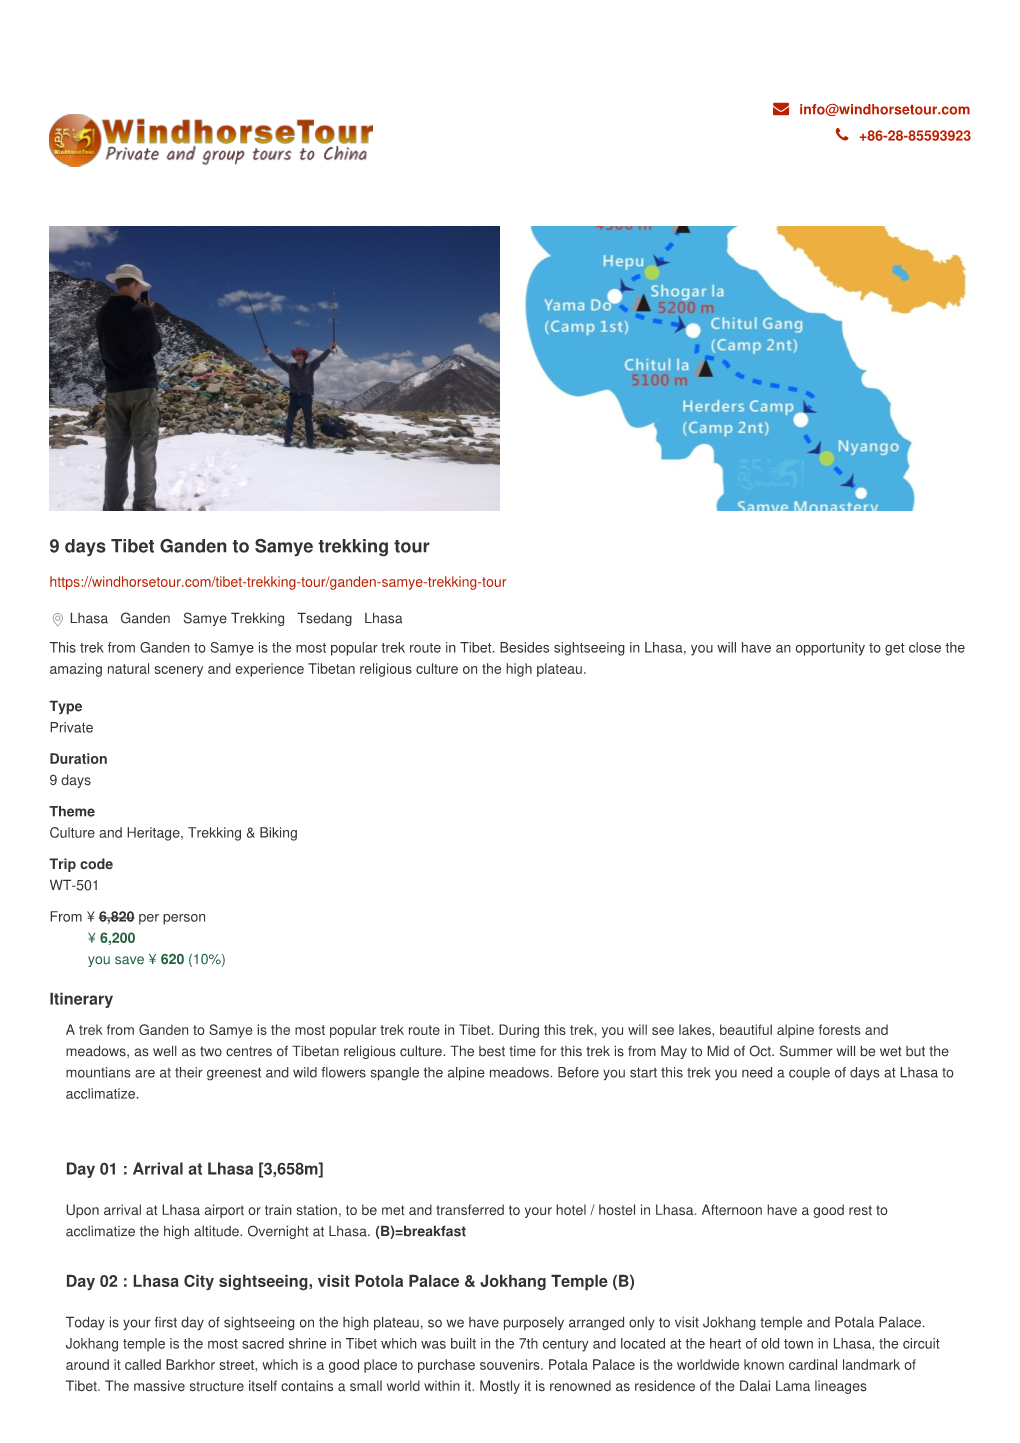 9 Days Tibet Ganden to Samye Trekking Tour